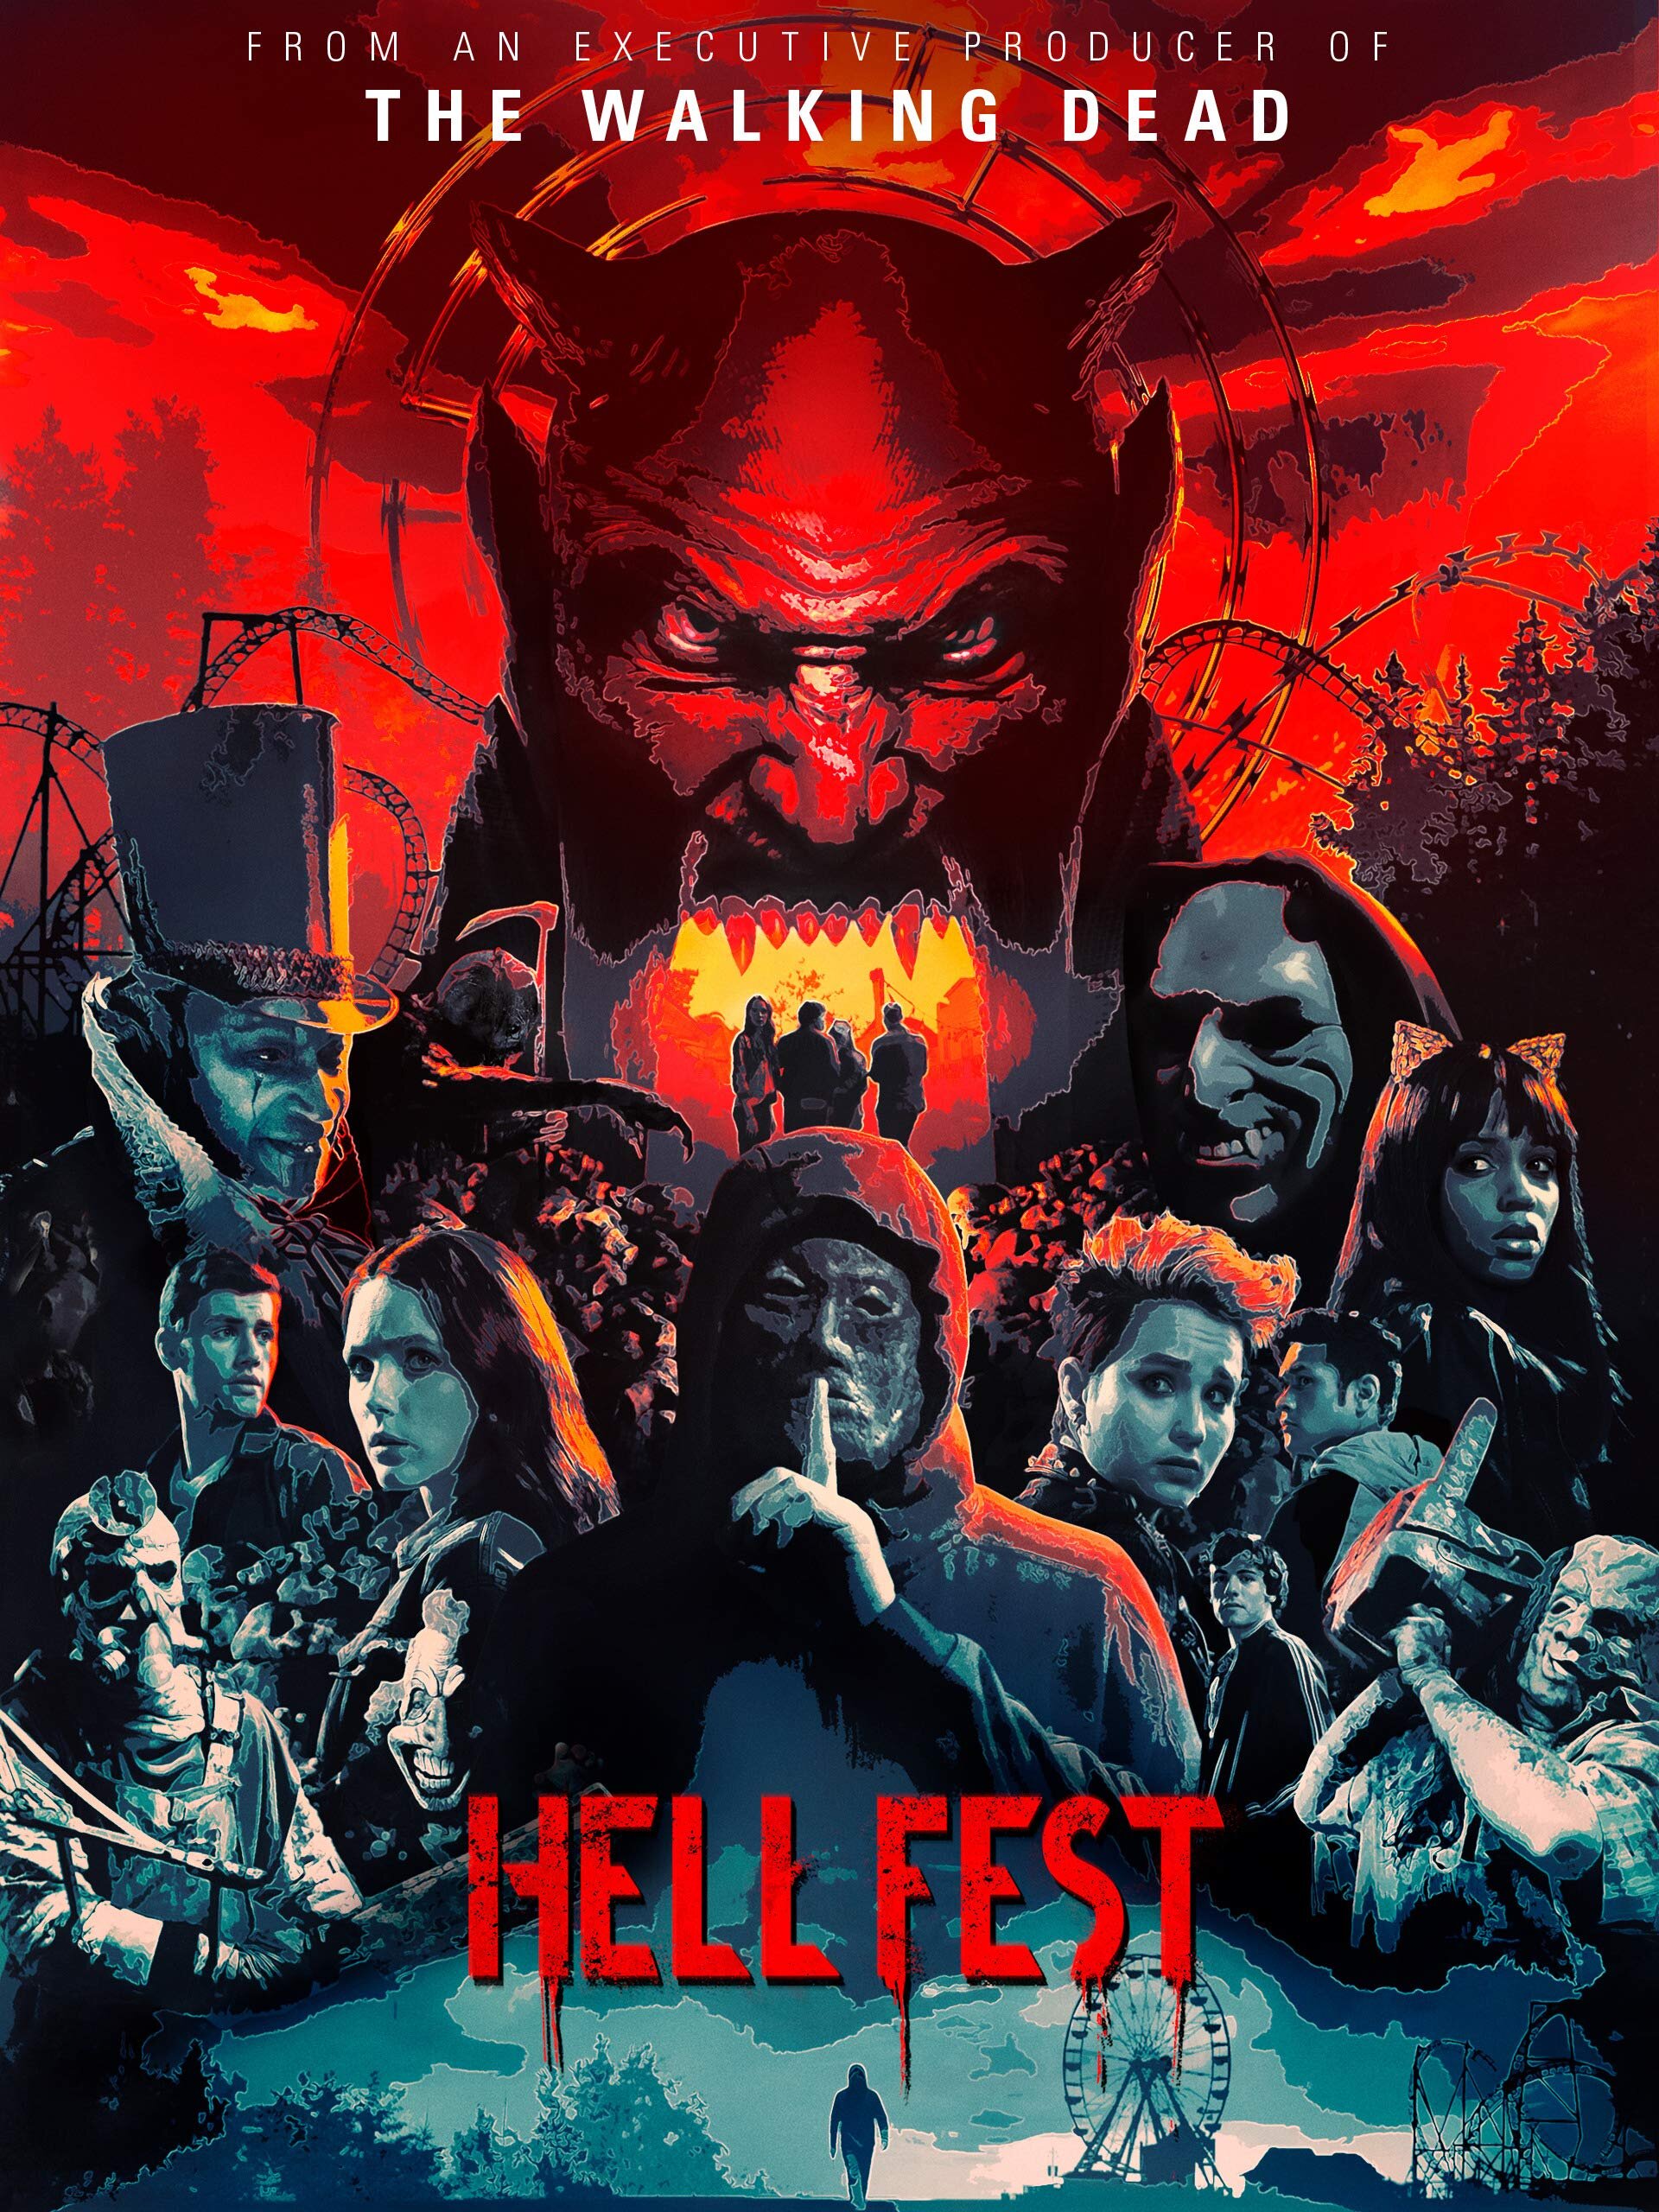 Hellfest.jpg